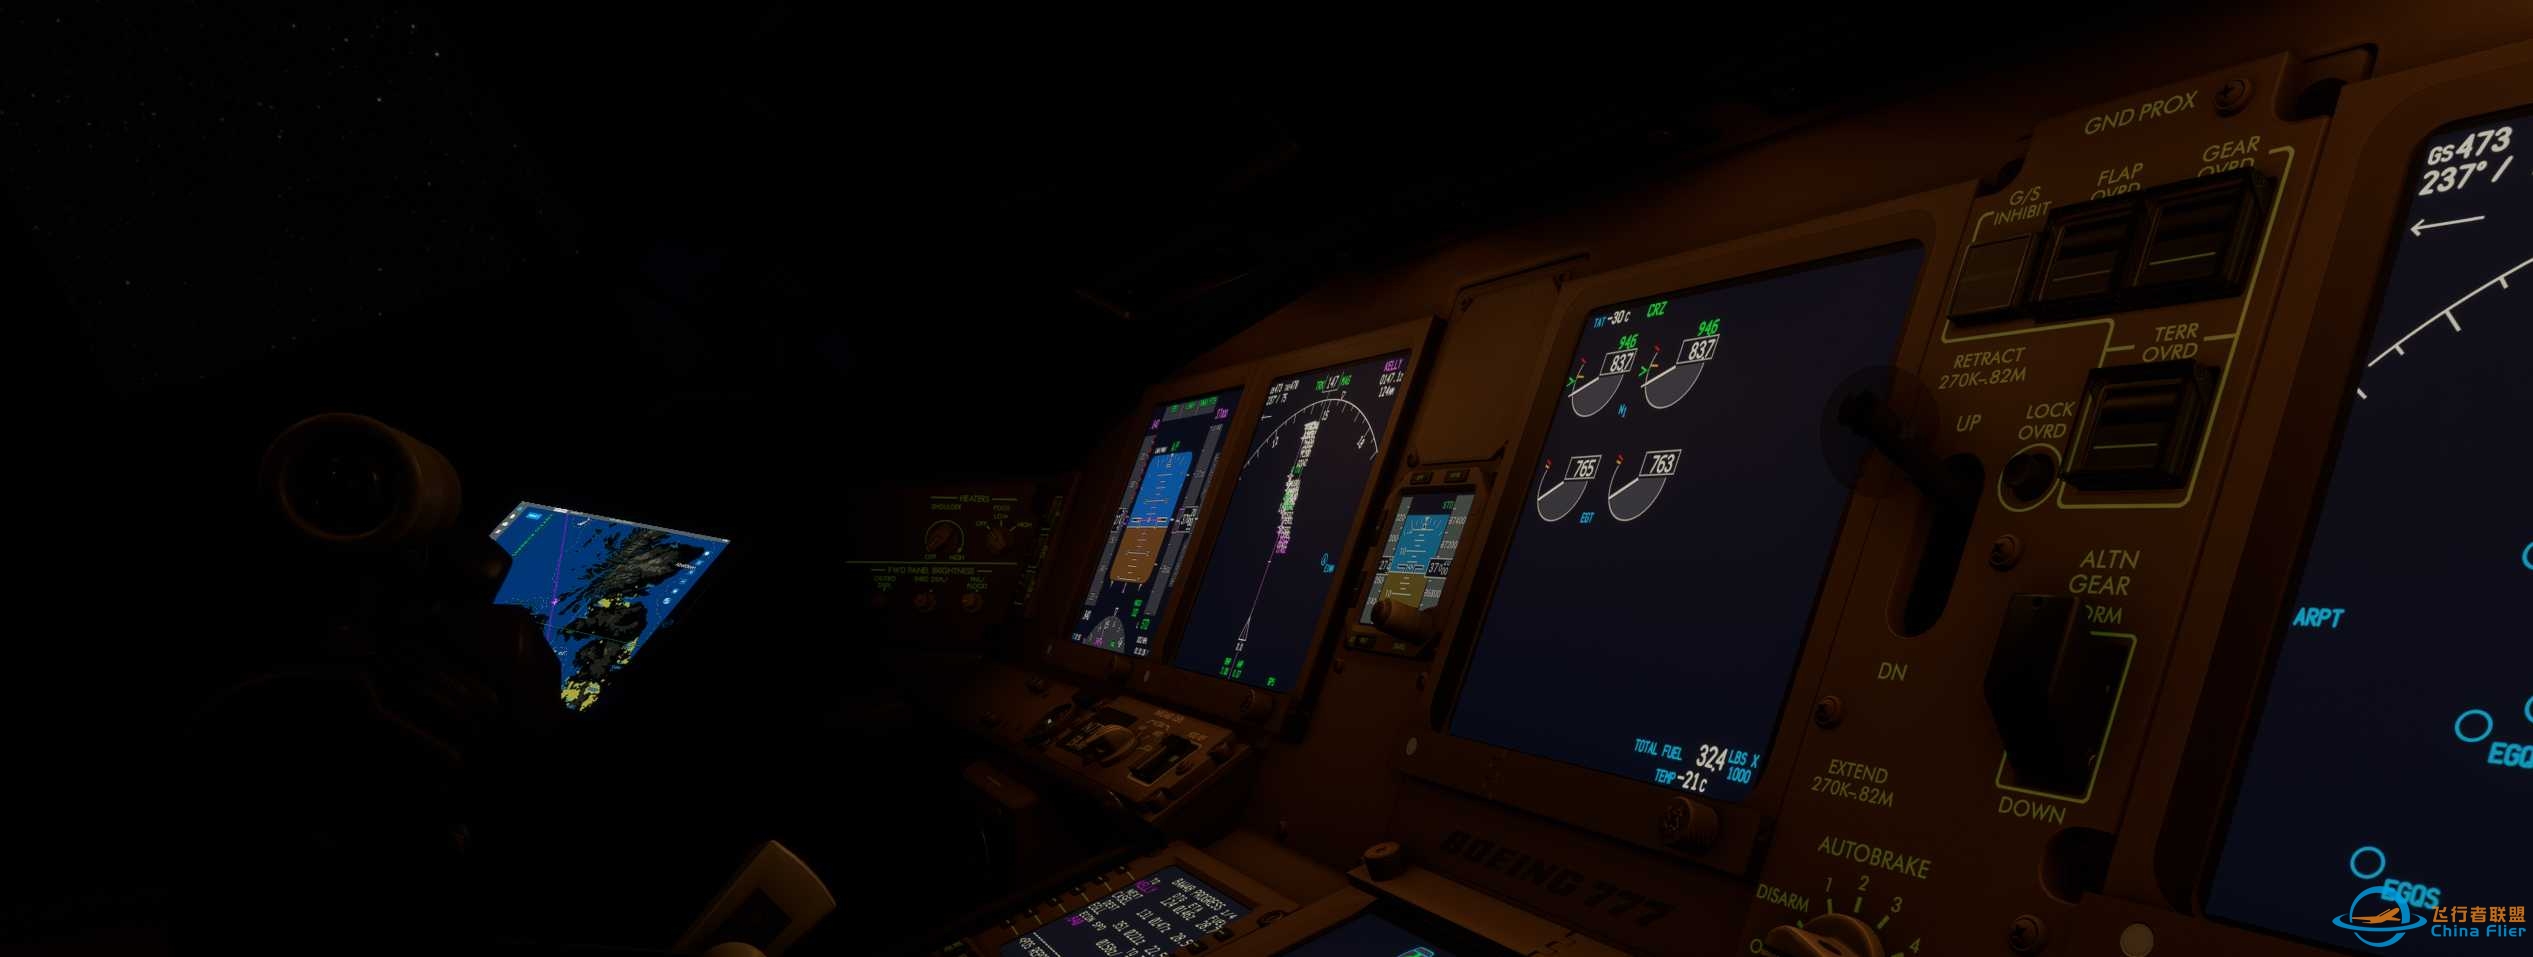 PMDG 777 展示 5：航空电子设备和驾驶舱-5216 